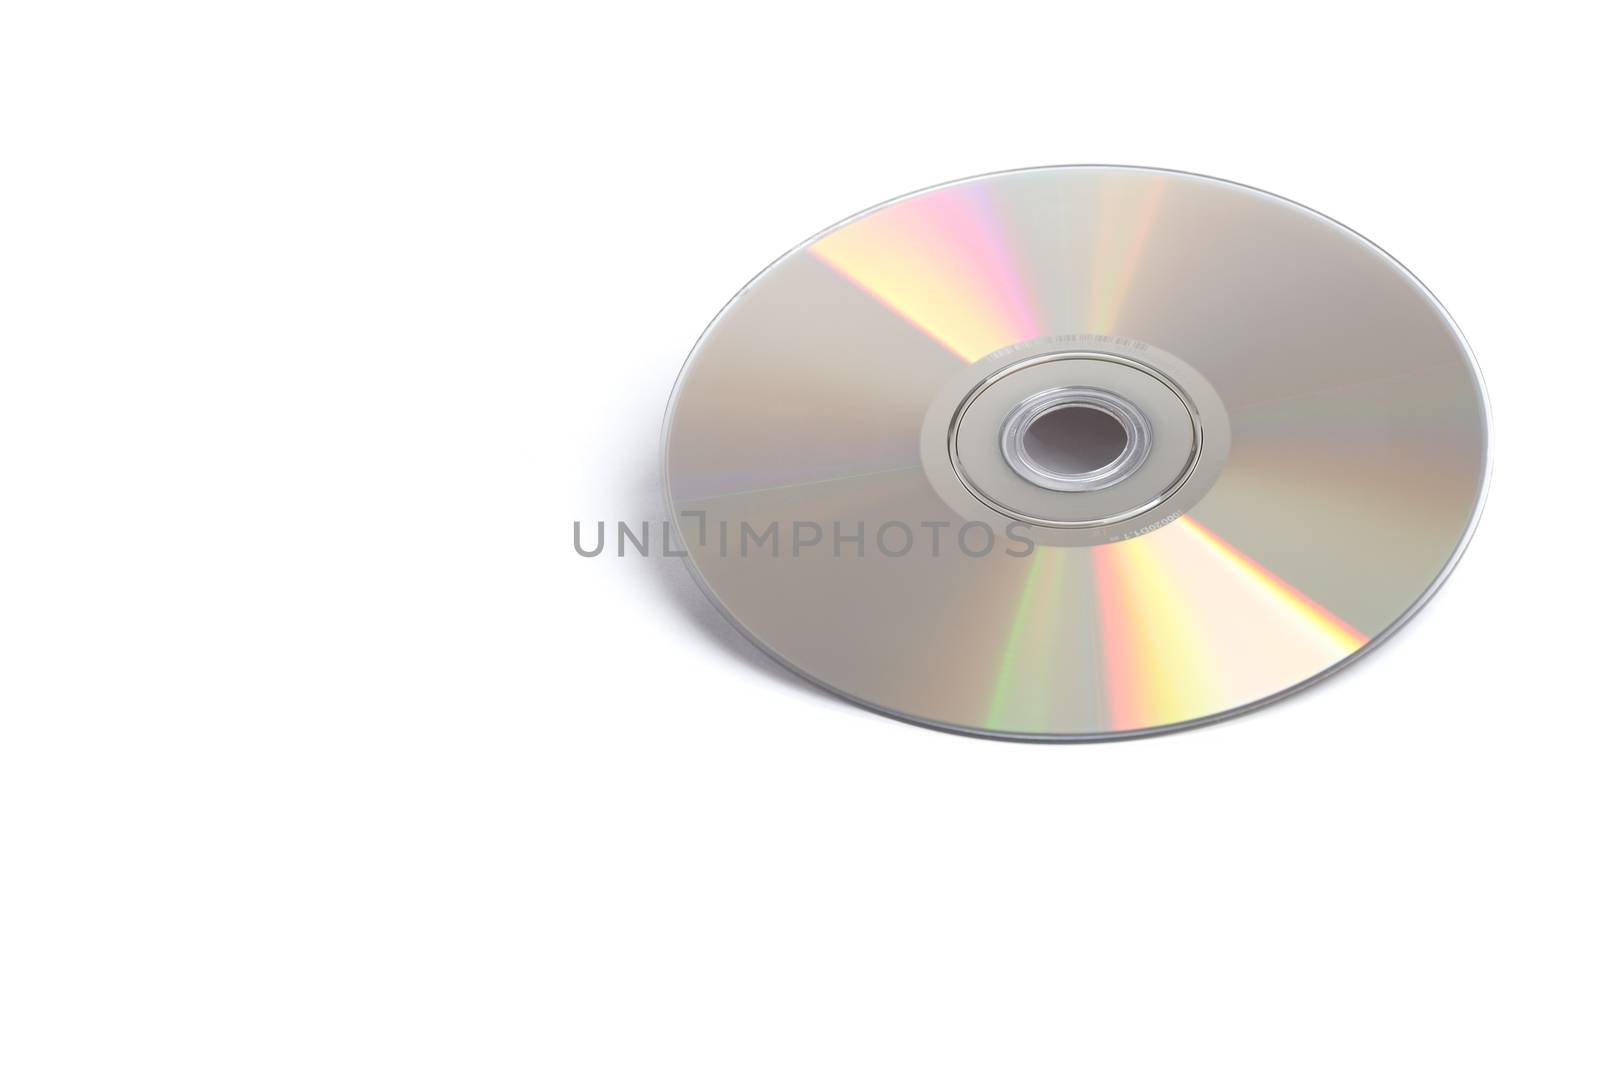 Shiny DVD on White by justtscott